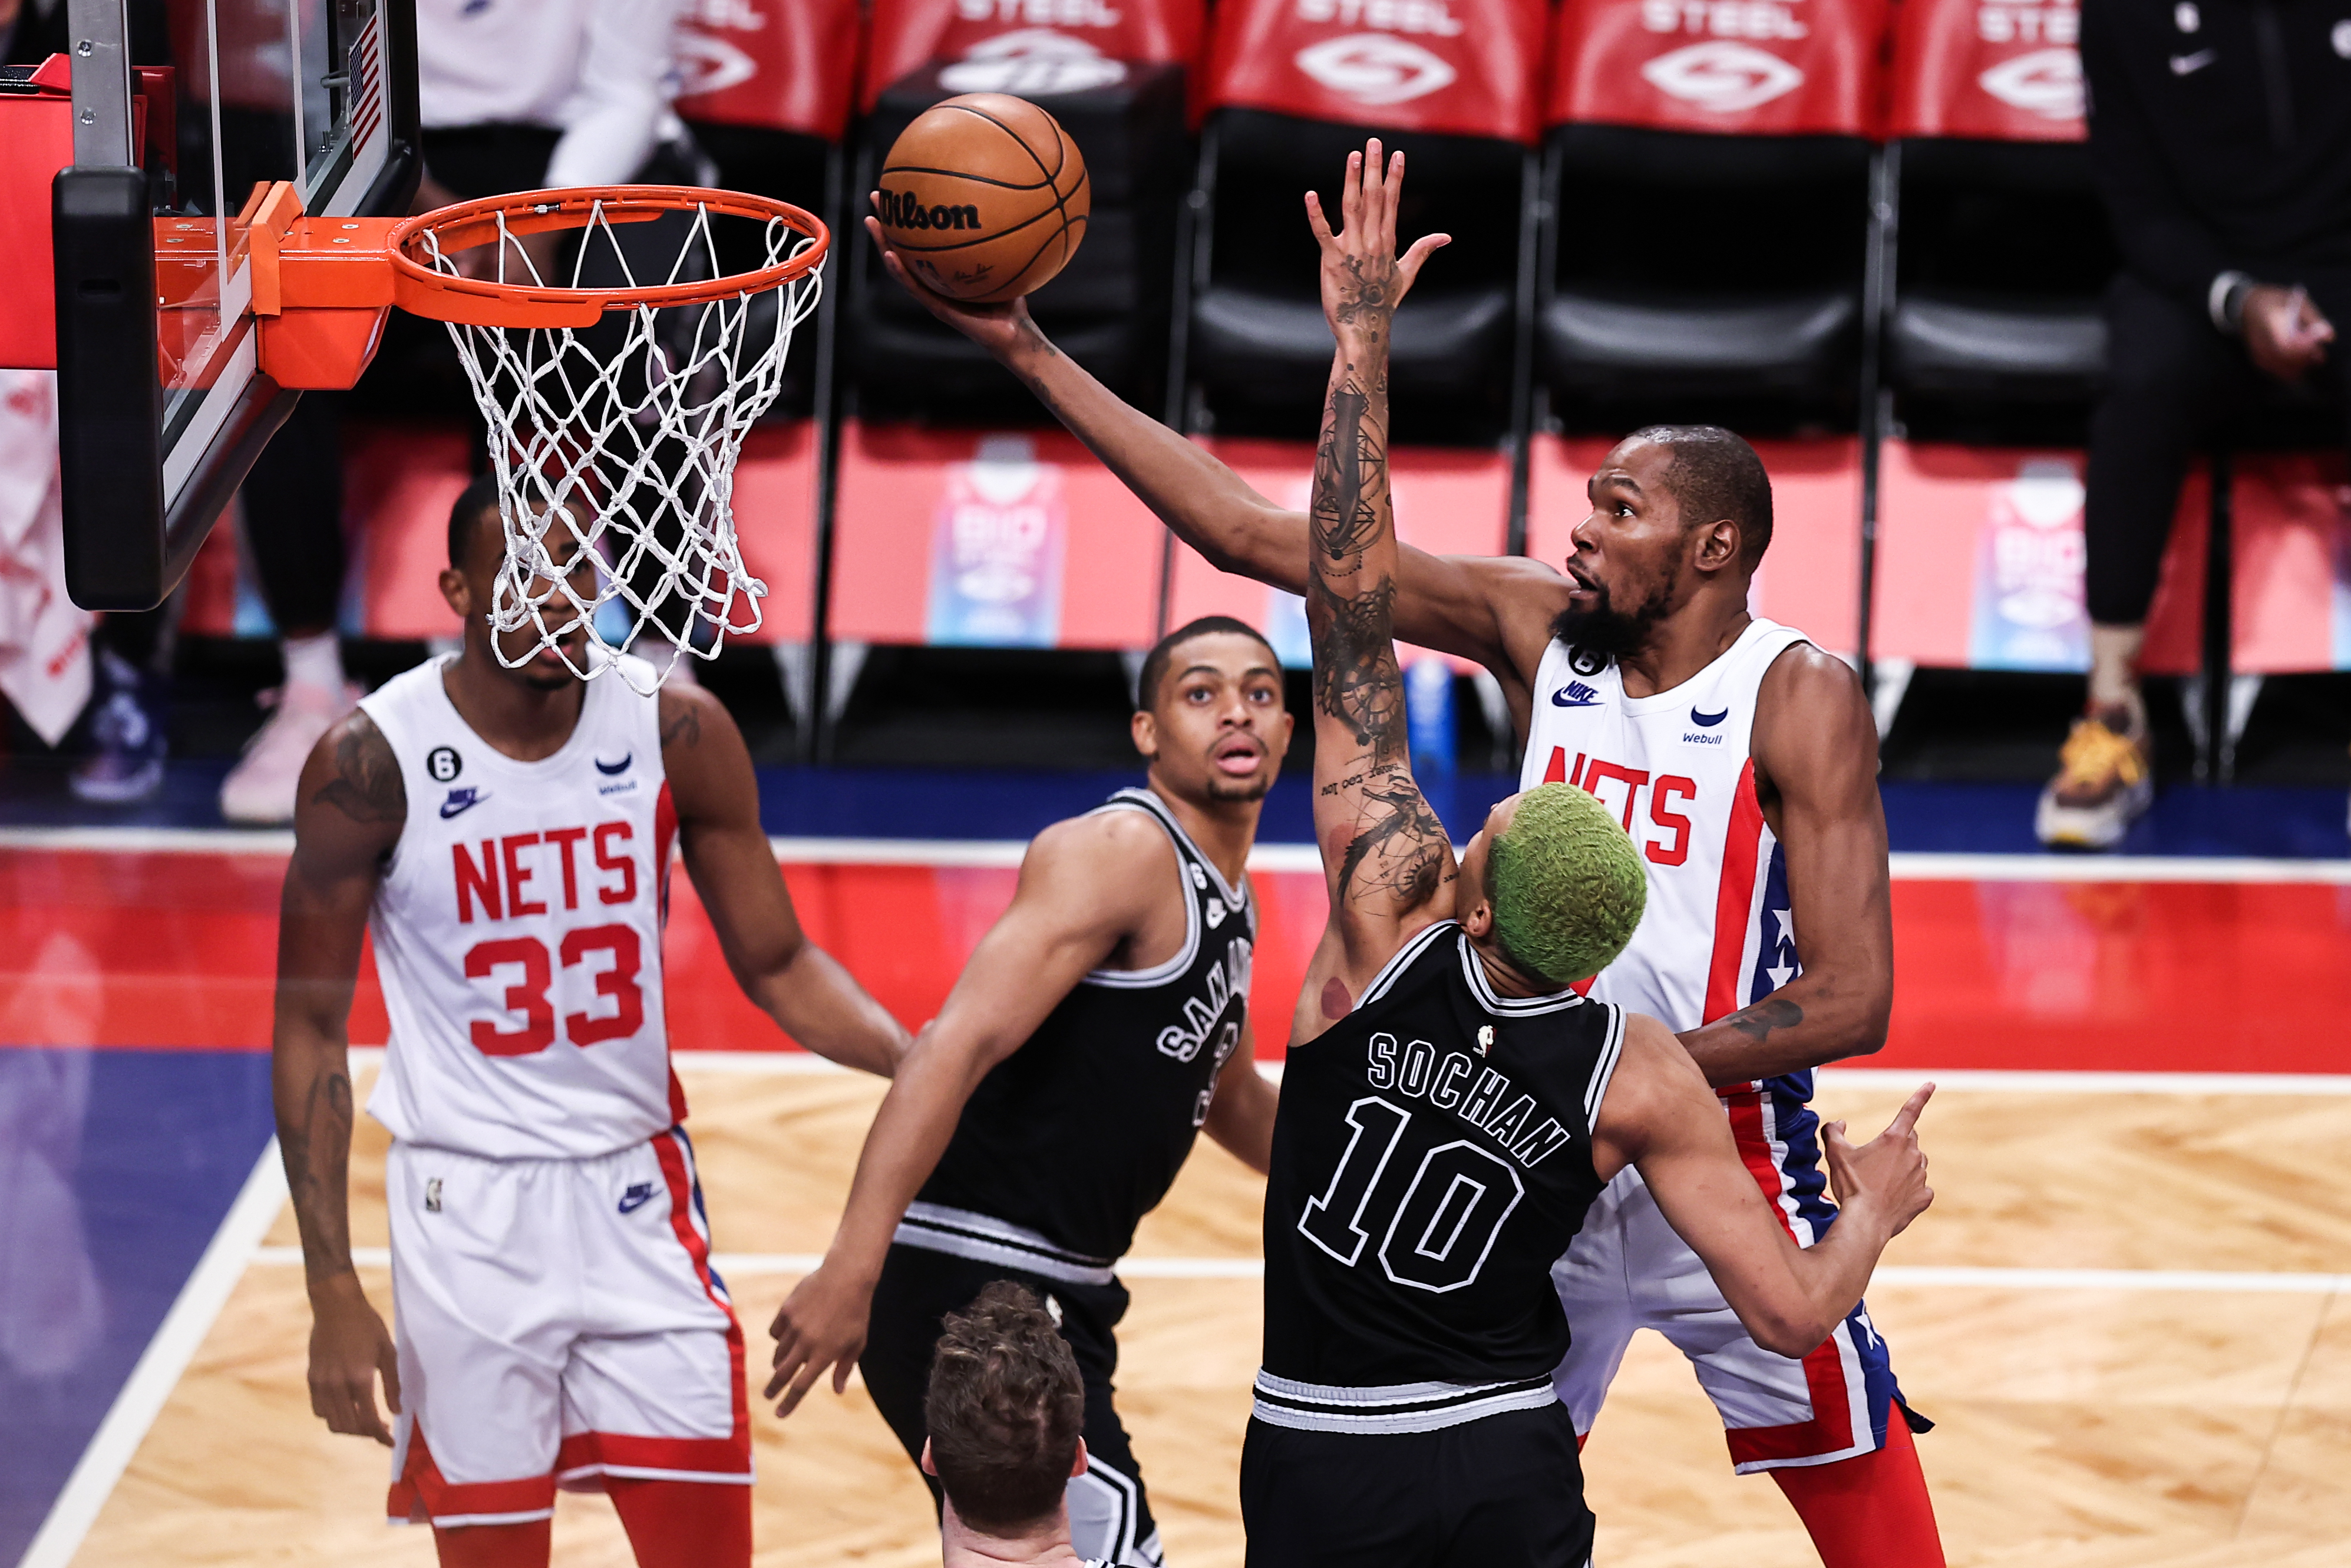 San Antonio Spurs v Brooklyn Nets